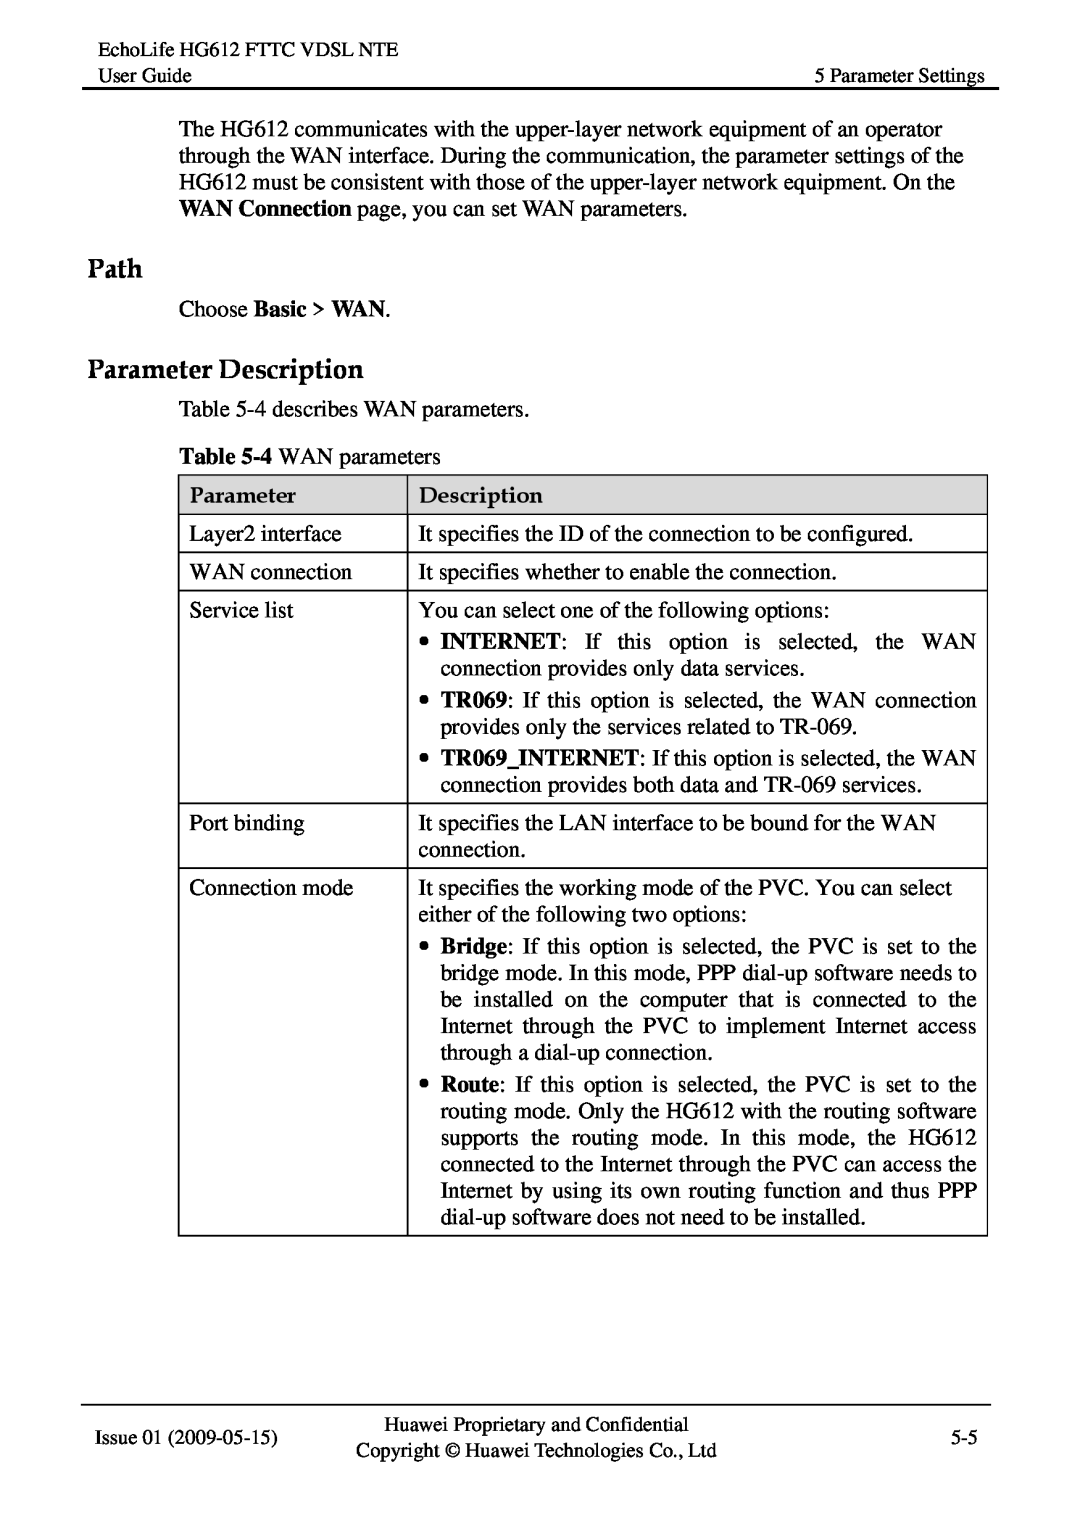 Huawei HG612FTTC VDSL NTE manual Path, Parameter Description, Choose Basic WAN 